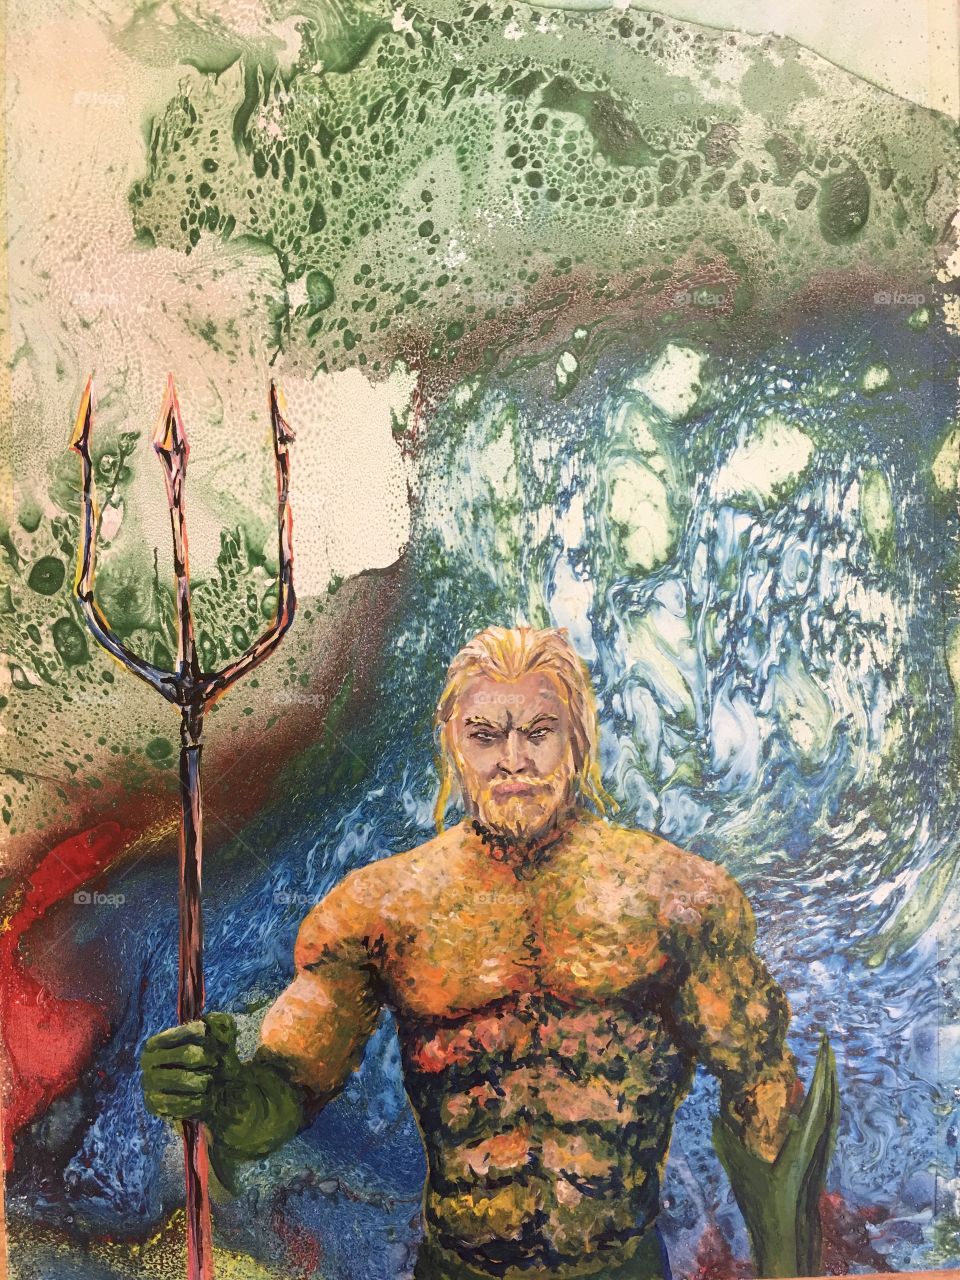 Aqua man painting 